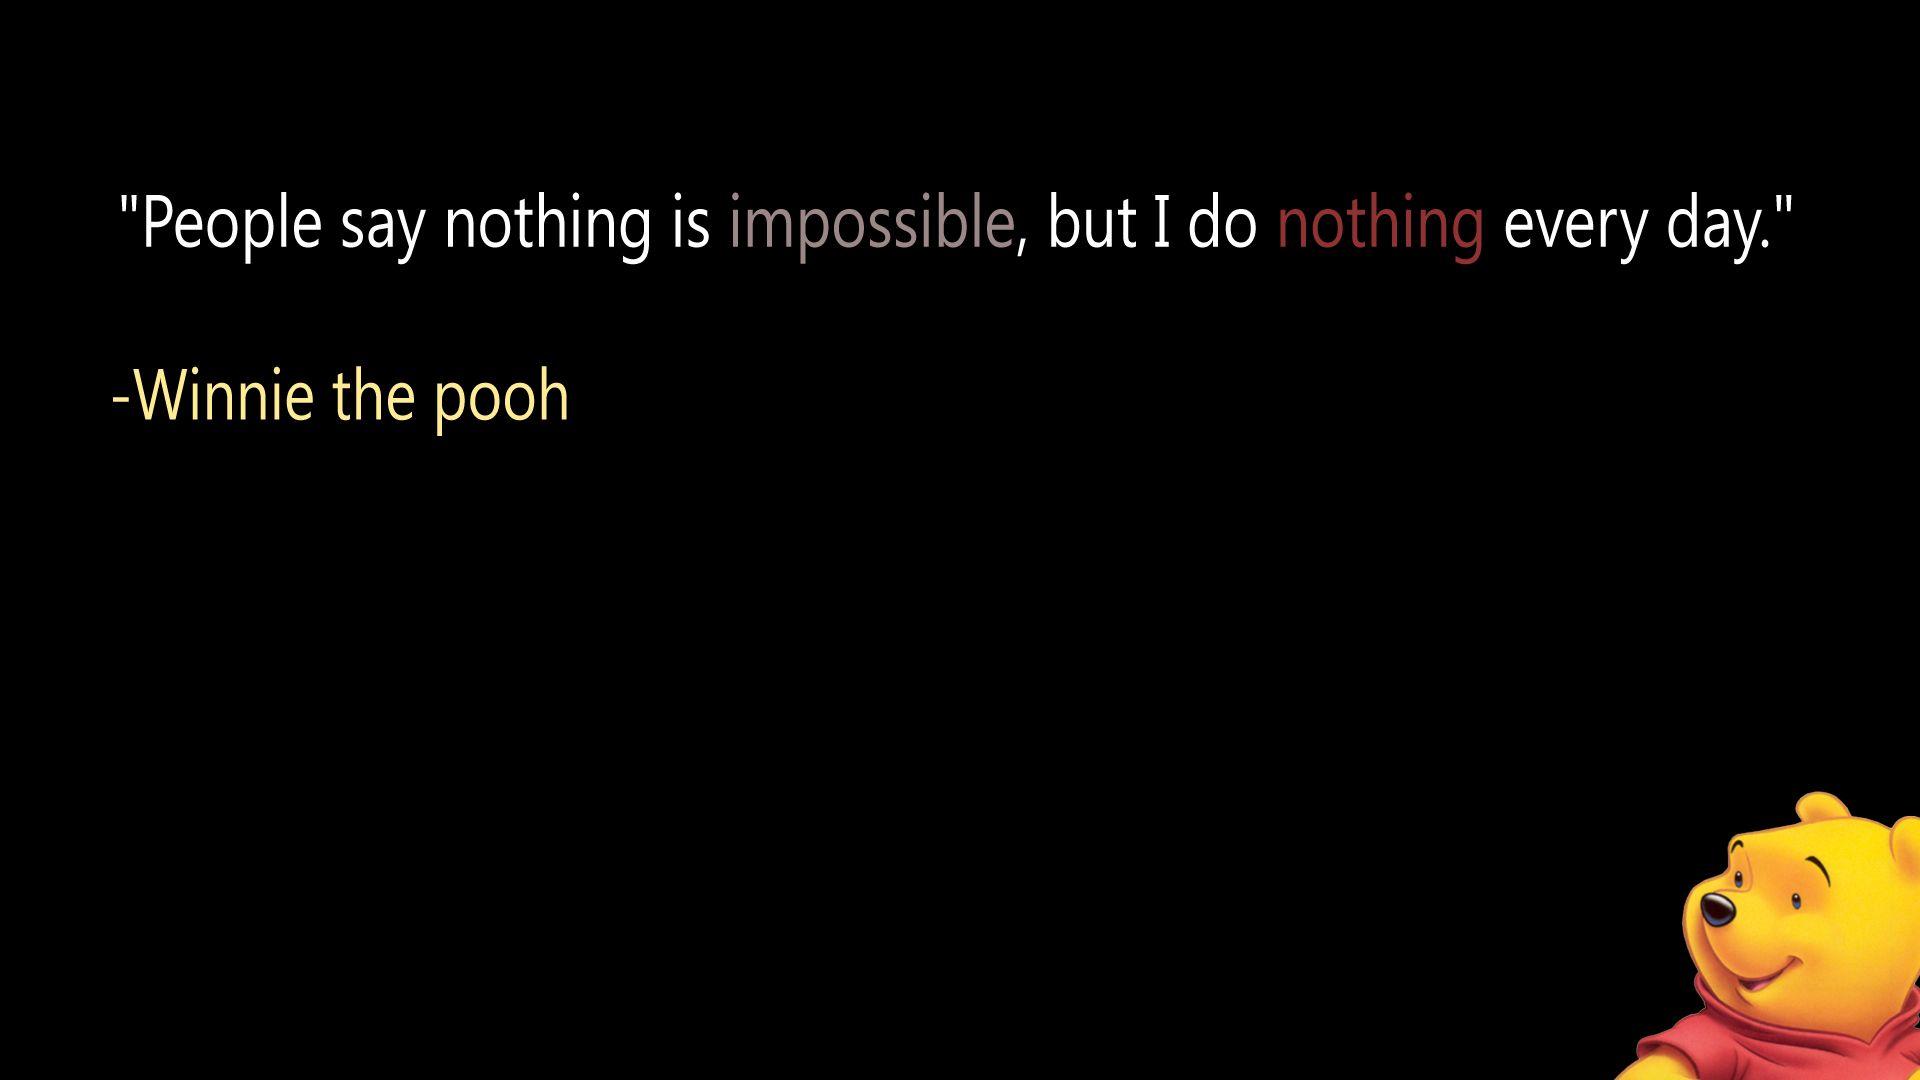 Winnie the pooh minimalistic quote by Dashie36